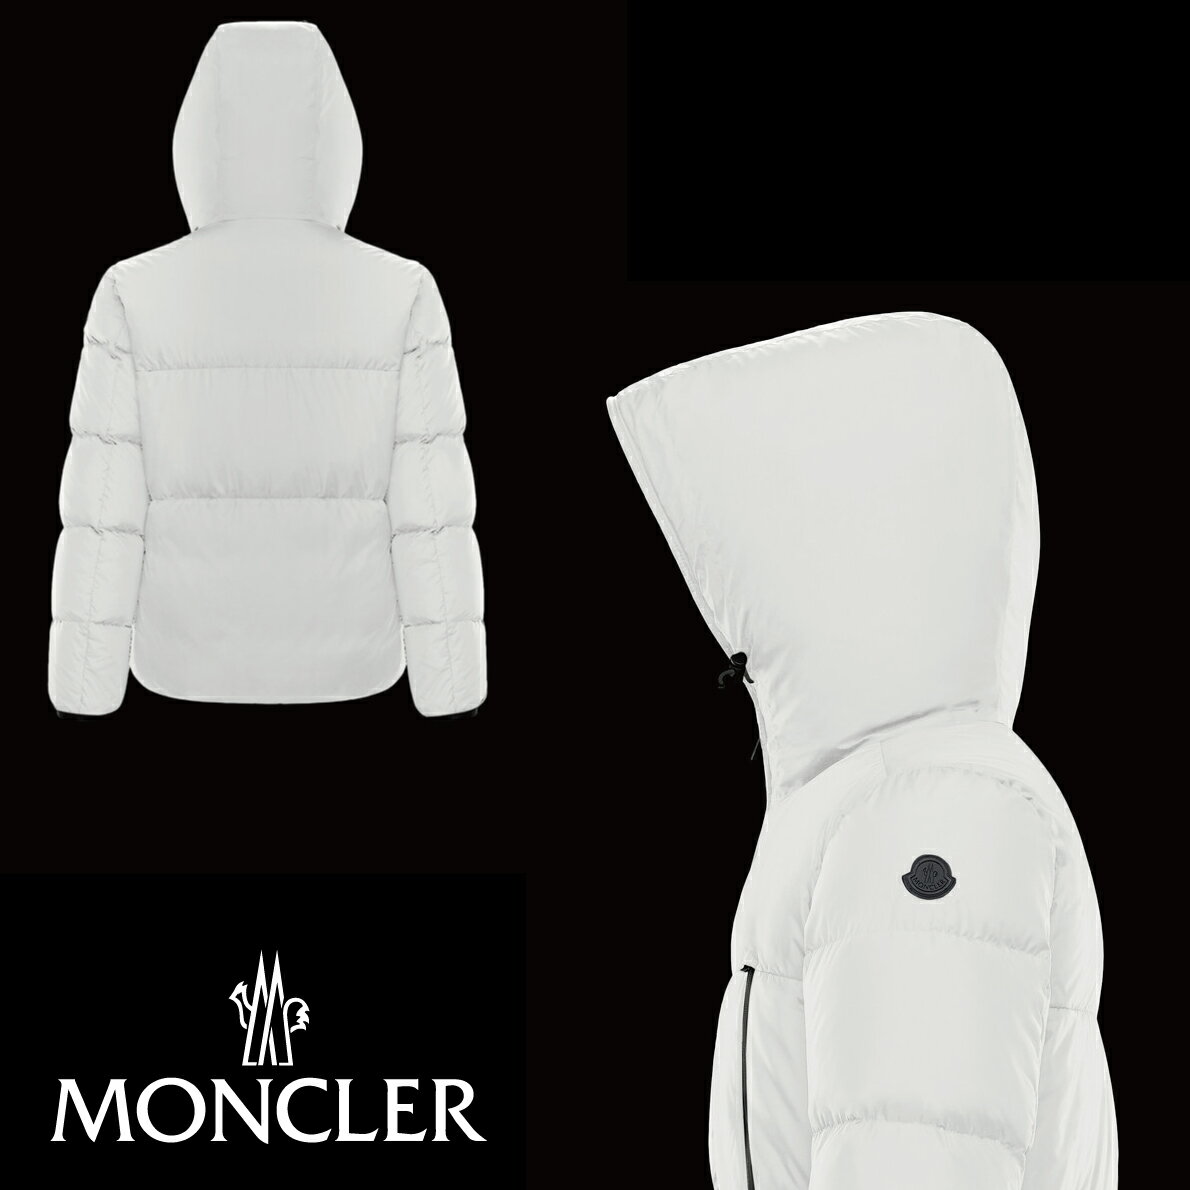 MONCLER MONTCLA White Blanc Mens Down Jacket 2021AW モンクレール モンクラ ダウンジャケット メンズ ホワイト